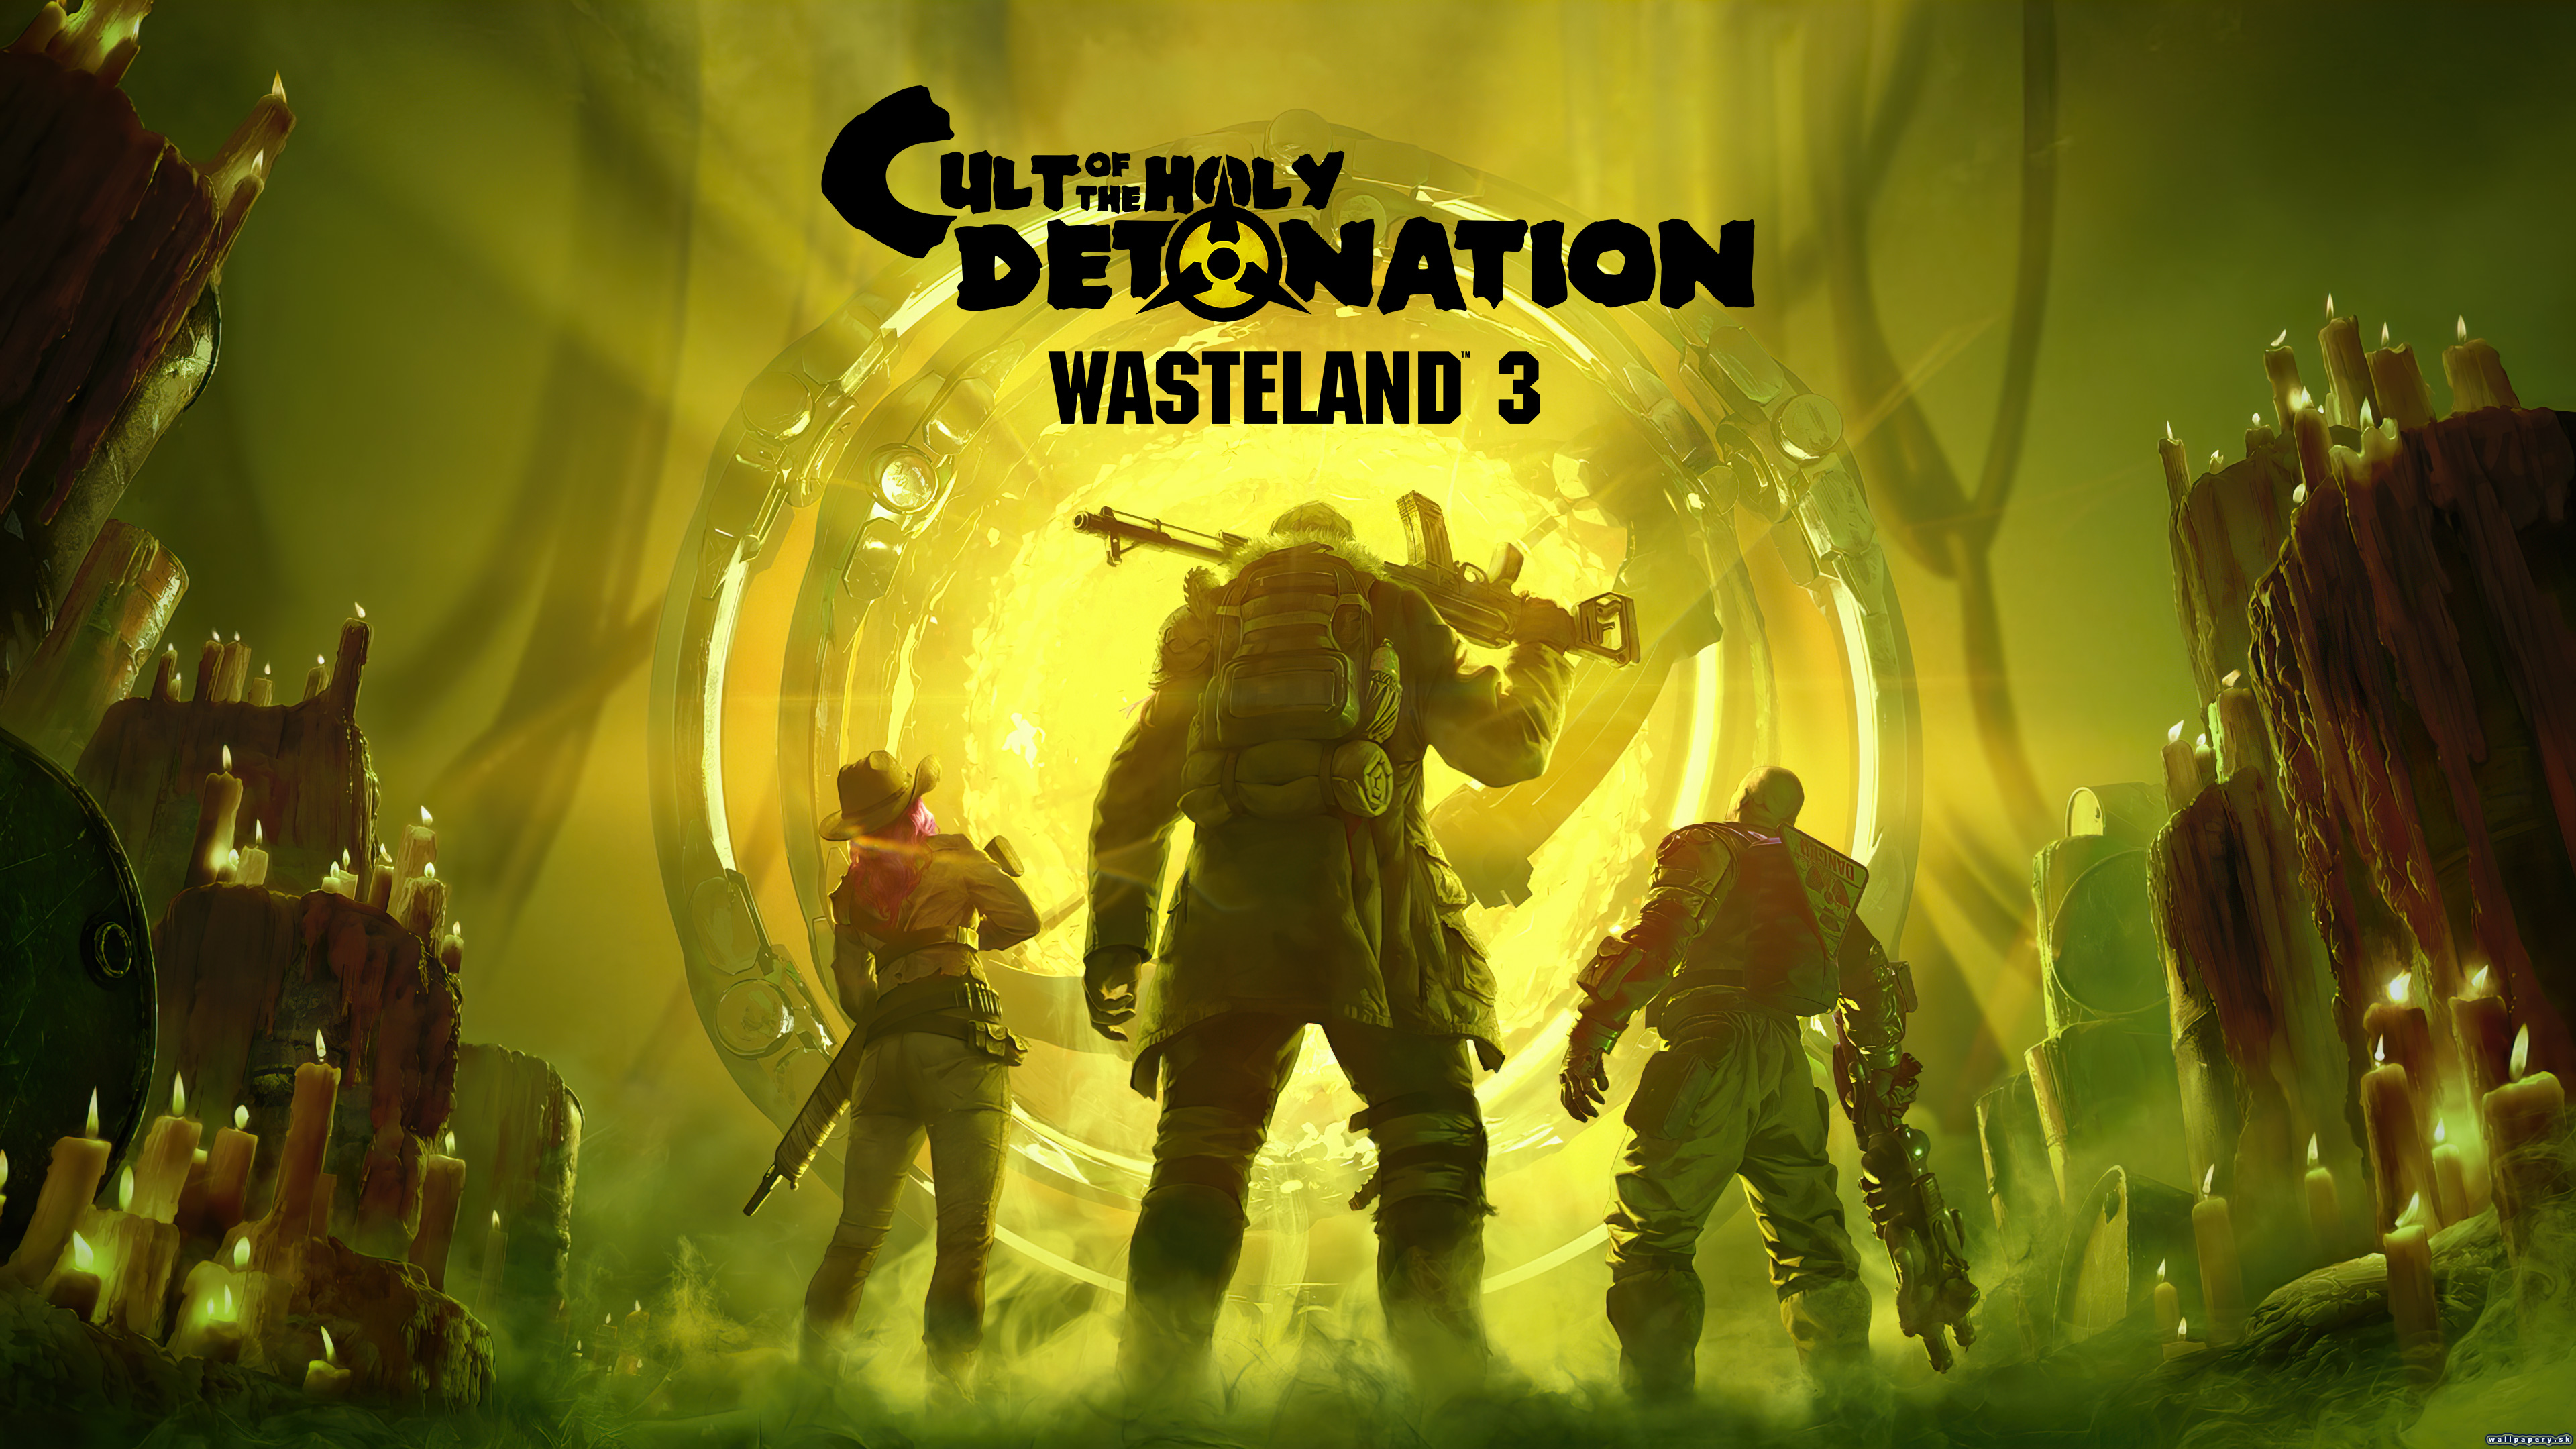 Wasteland 3: Cult of the Holy Detonation - wallpaper 1